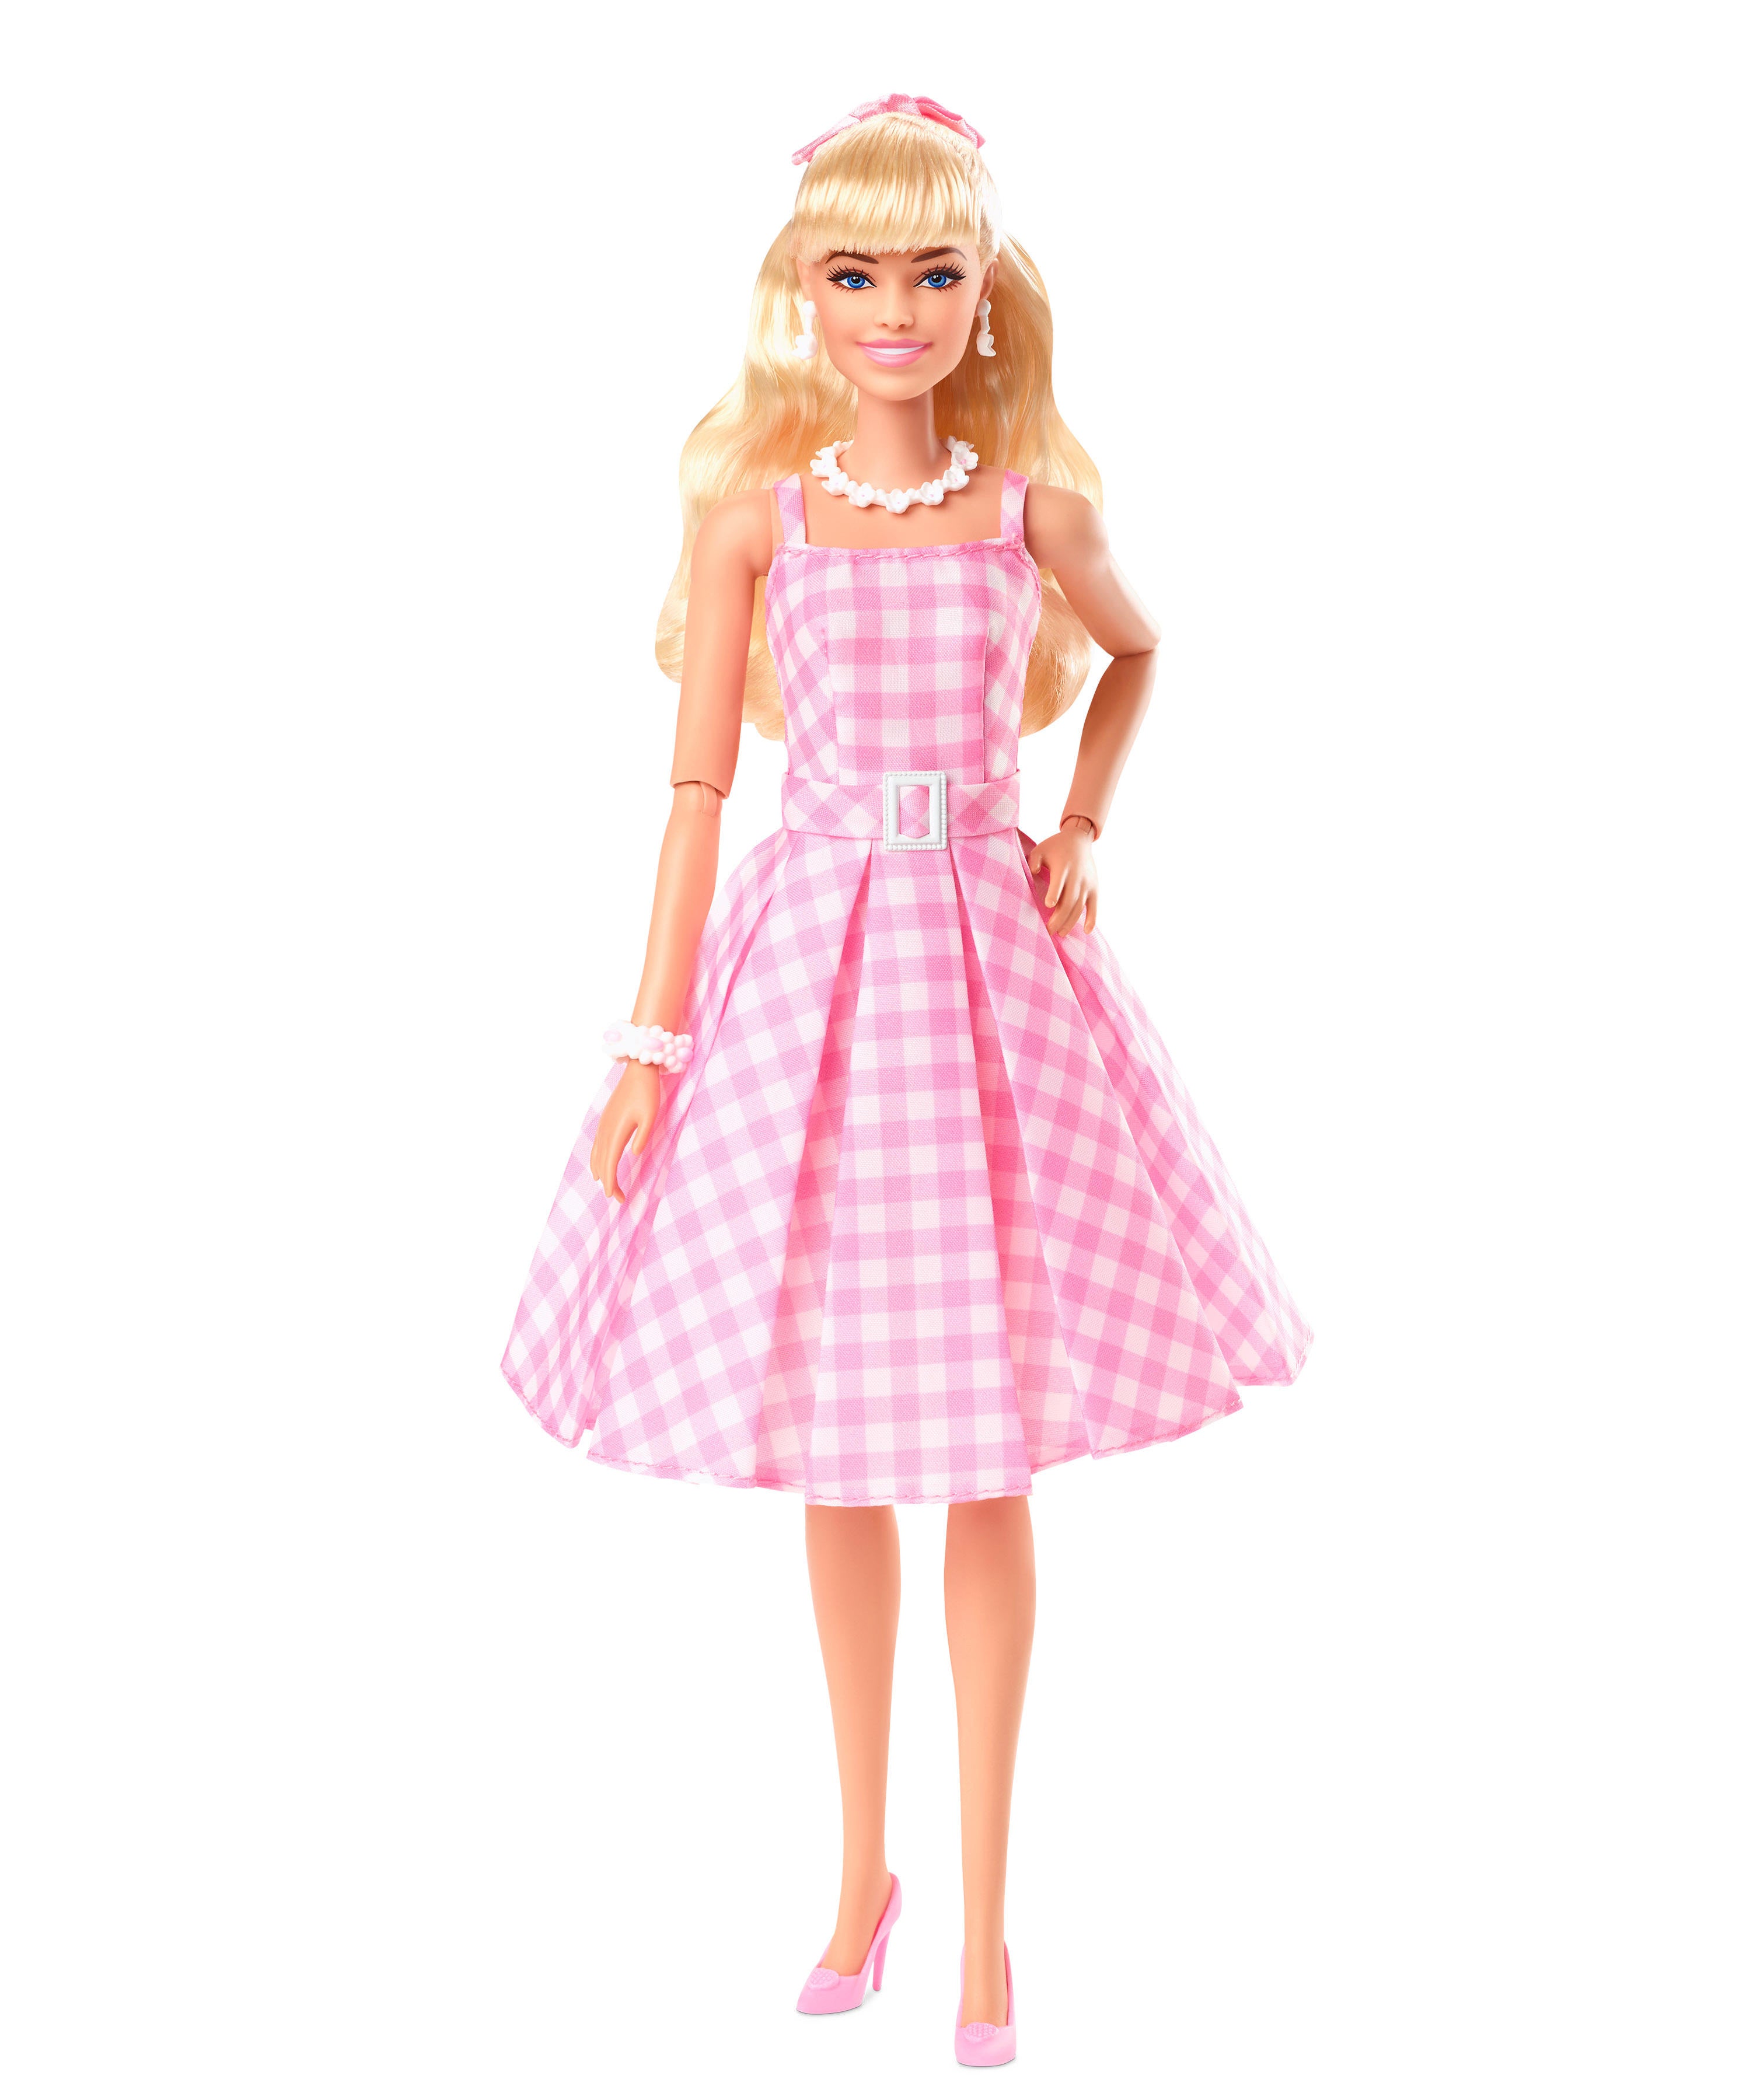 Barbie in Pink Power Jumpsuit – Barbie The Movie – Mattel Creations